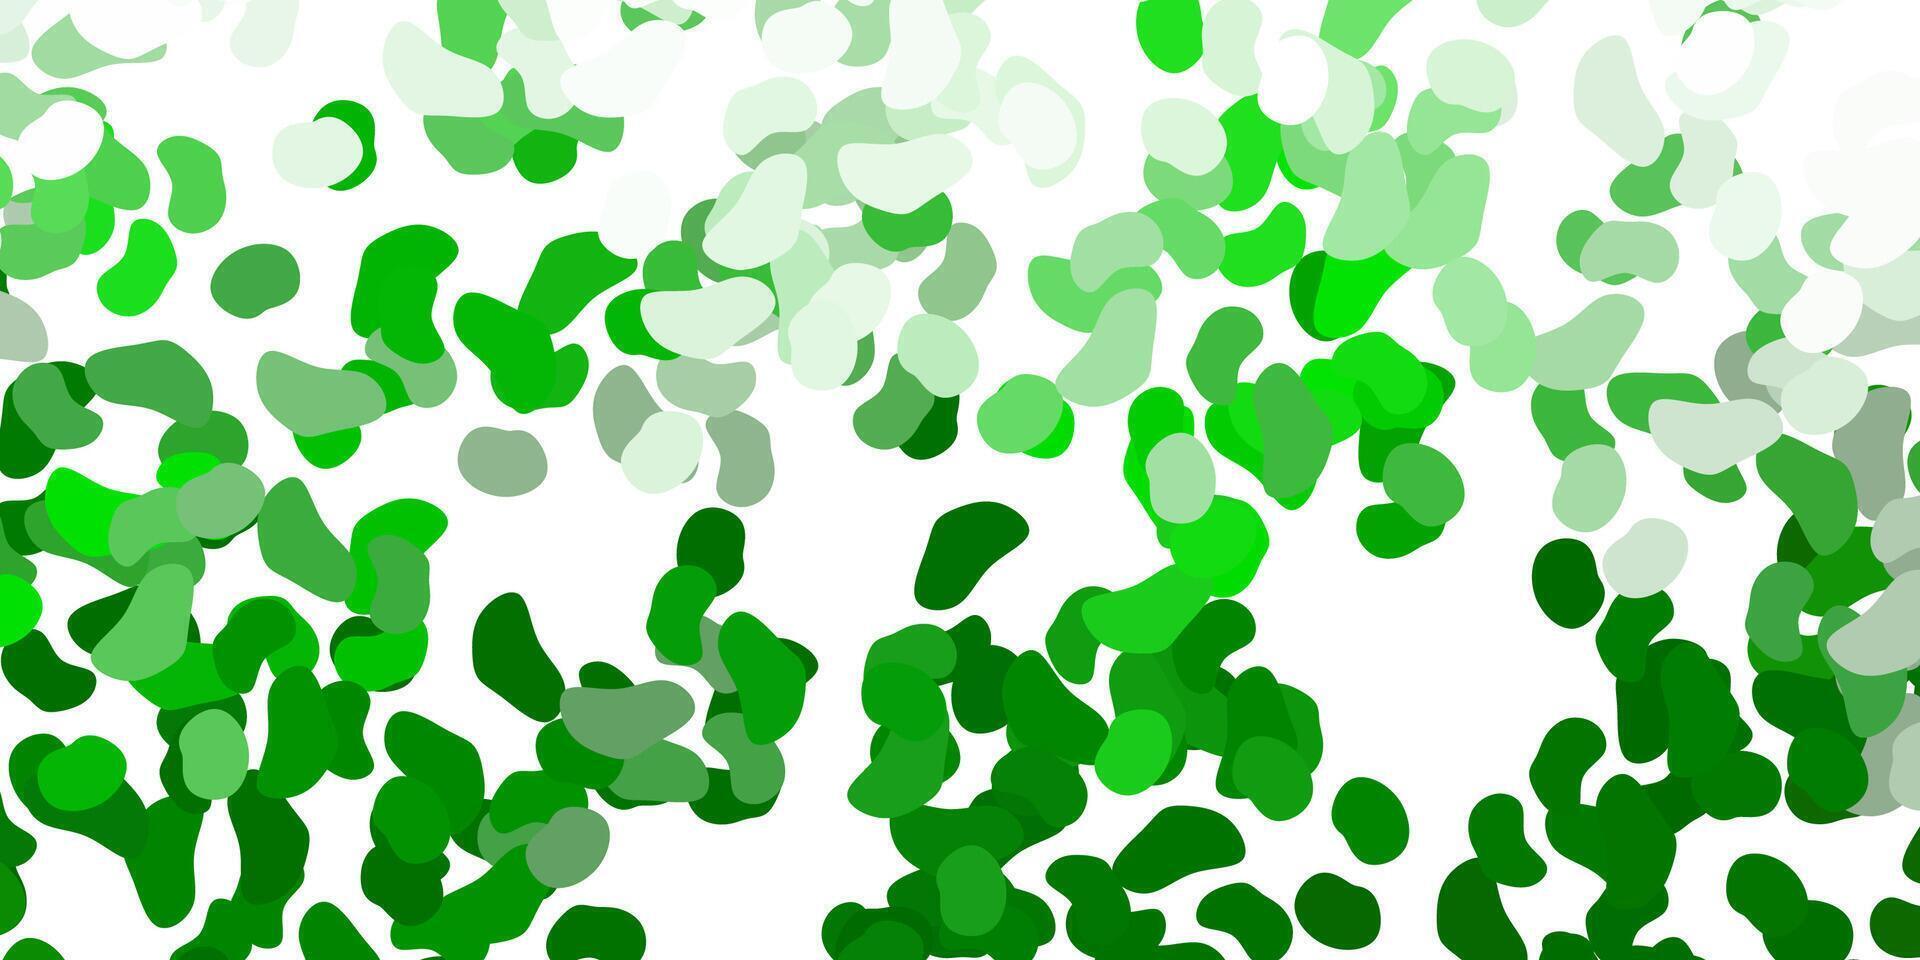 ljus grön bakgrund med kaotisk former. vektor